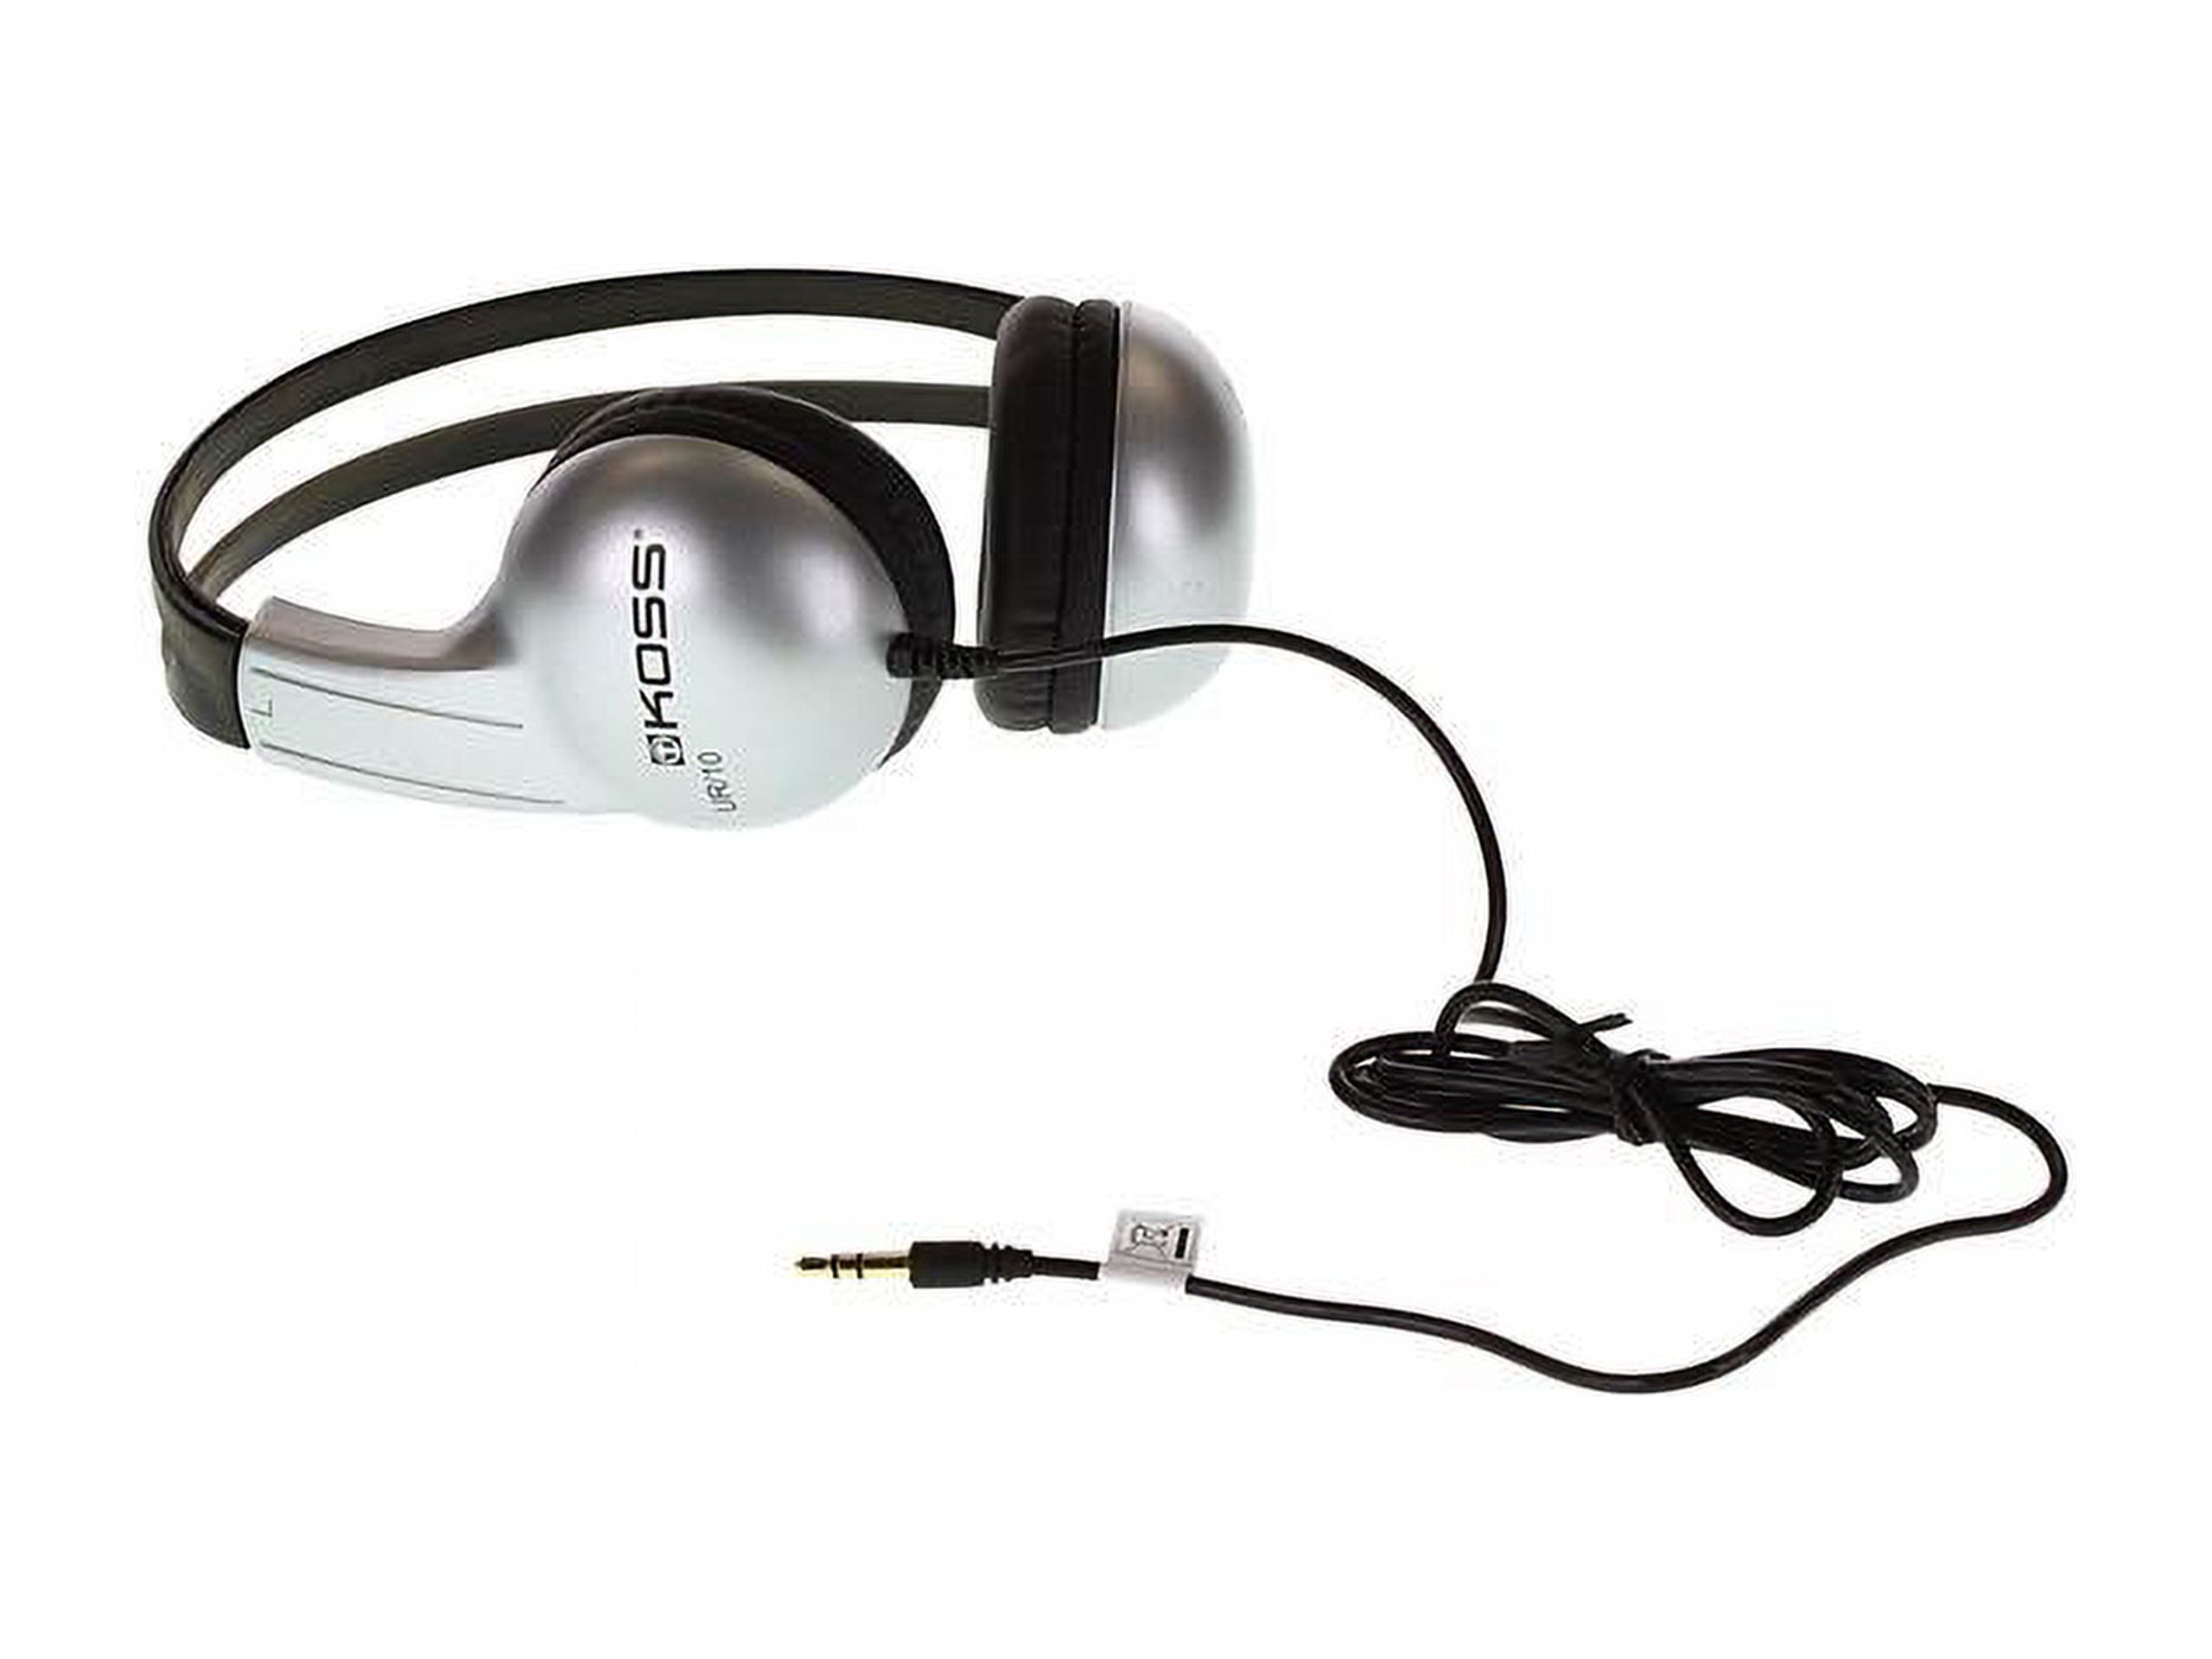 Koss Adjustable Headband Over-Ear Headphones, Gray, UR10 - image 2 of 2